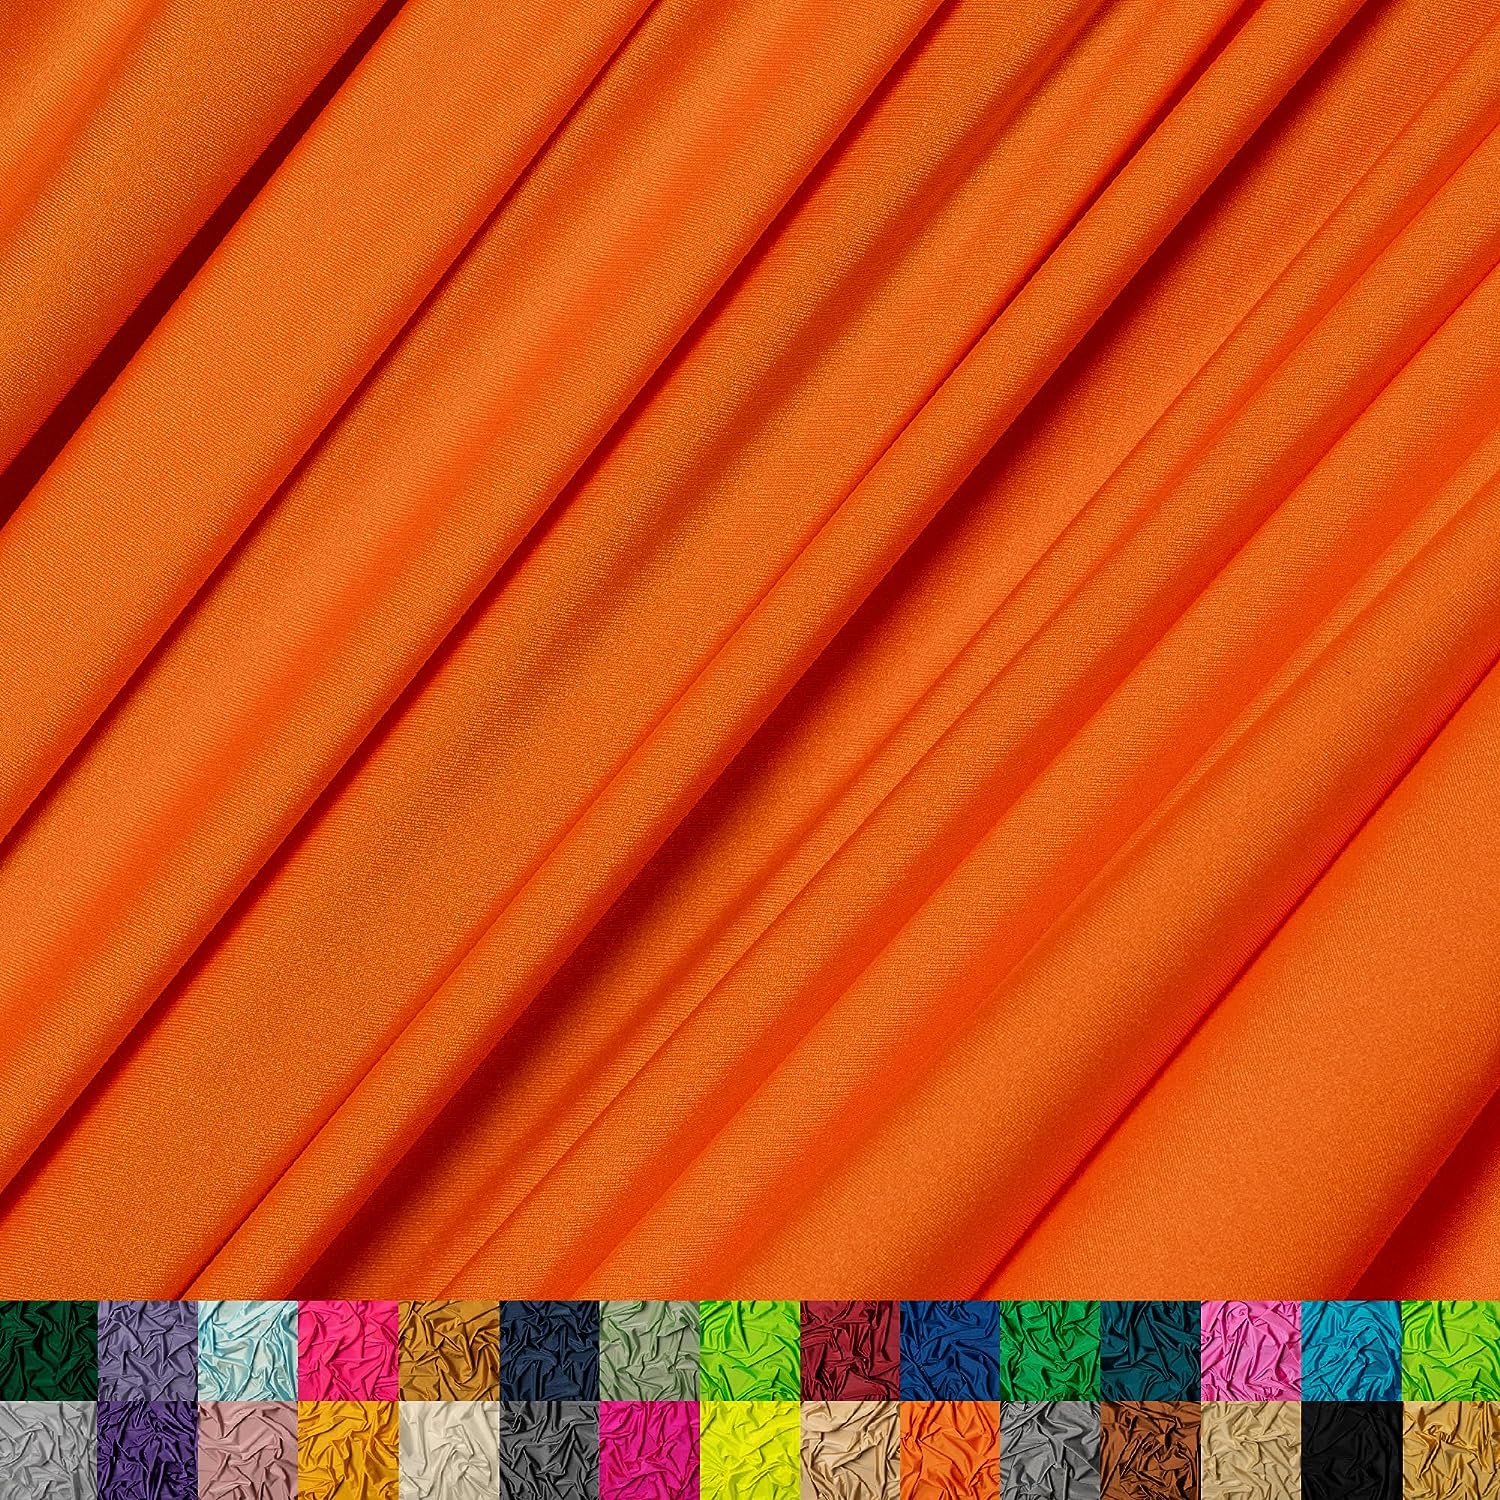 Neon Orange Luxury Nylon Spandex Fabric By The YardICE FABRICSICE FABRICSBy The Yard (58" Width)Neon Orange Luxury Nylon Spandex Fabric By The Yard ICE FABRICS